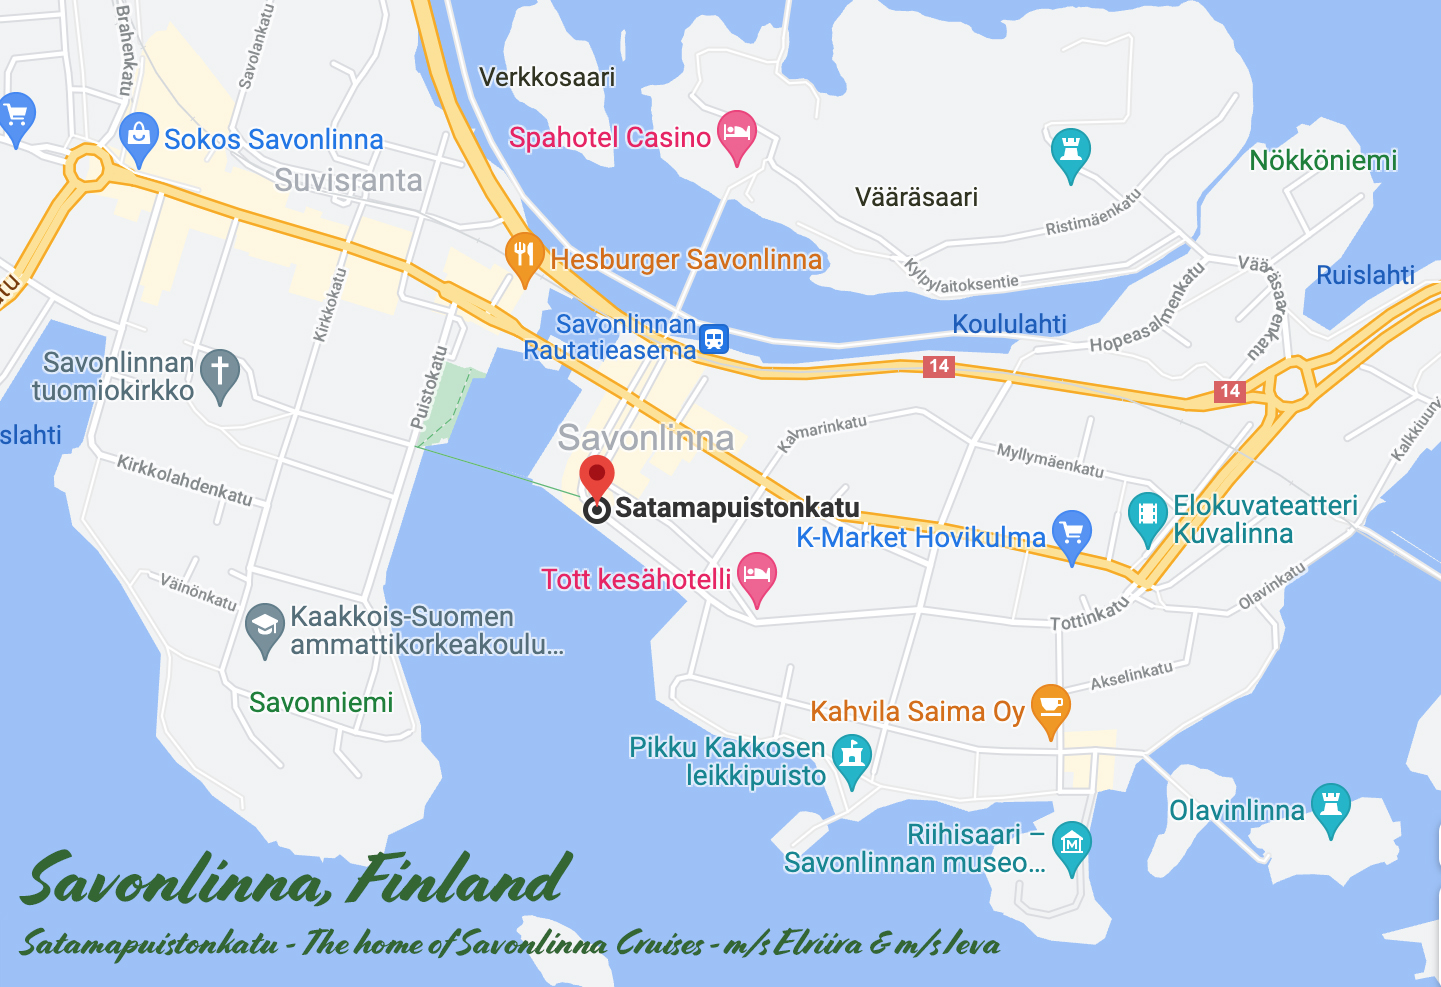 Home harbour of Savonlinna Cruises, m/s Elviira and m/s Ieva